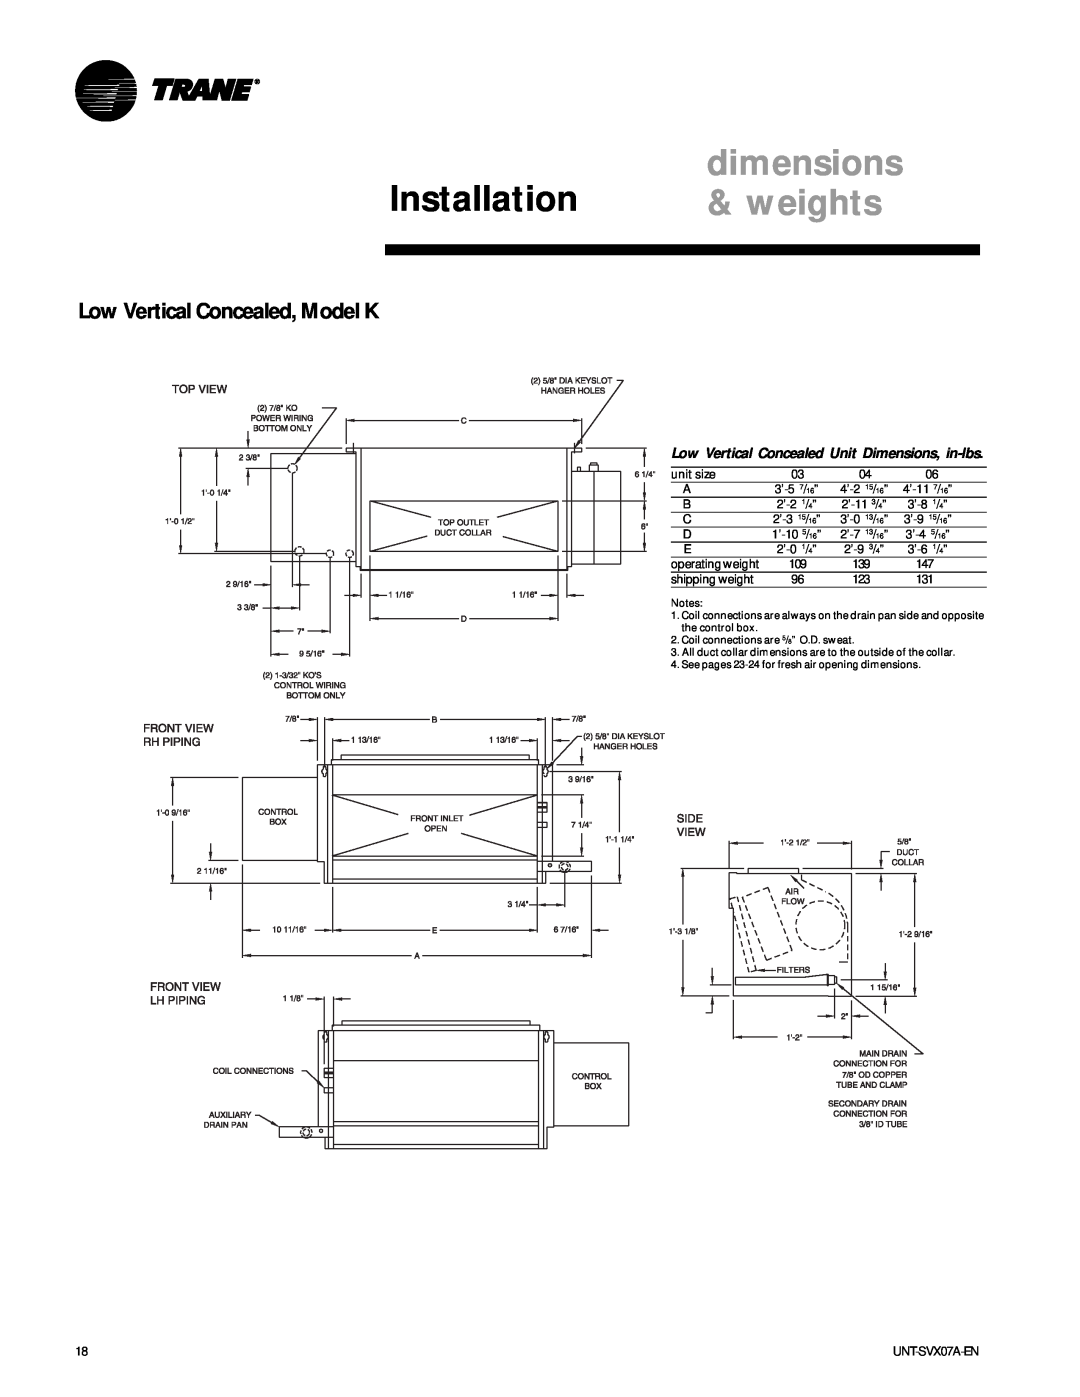 Trane UNT-SVX07A-EN manual Low Vertical Concealed, Model K, Installation, dimensions, weights 